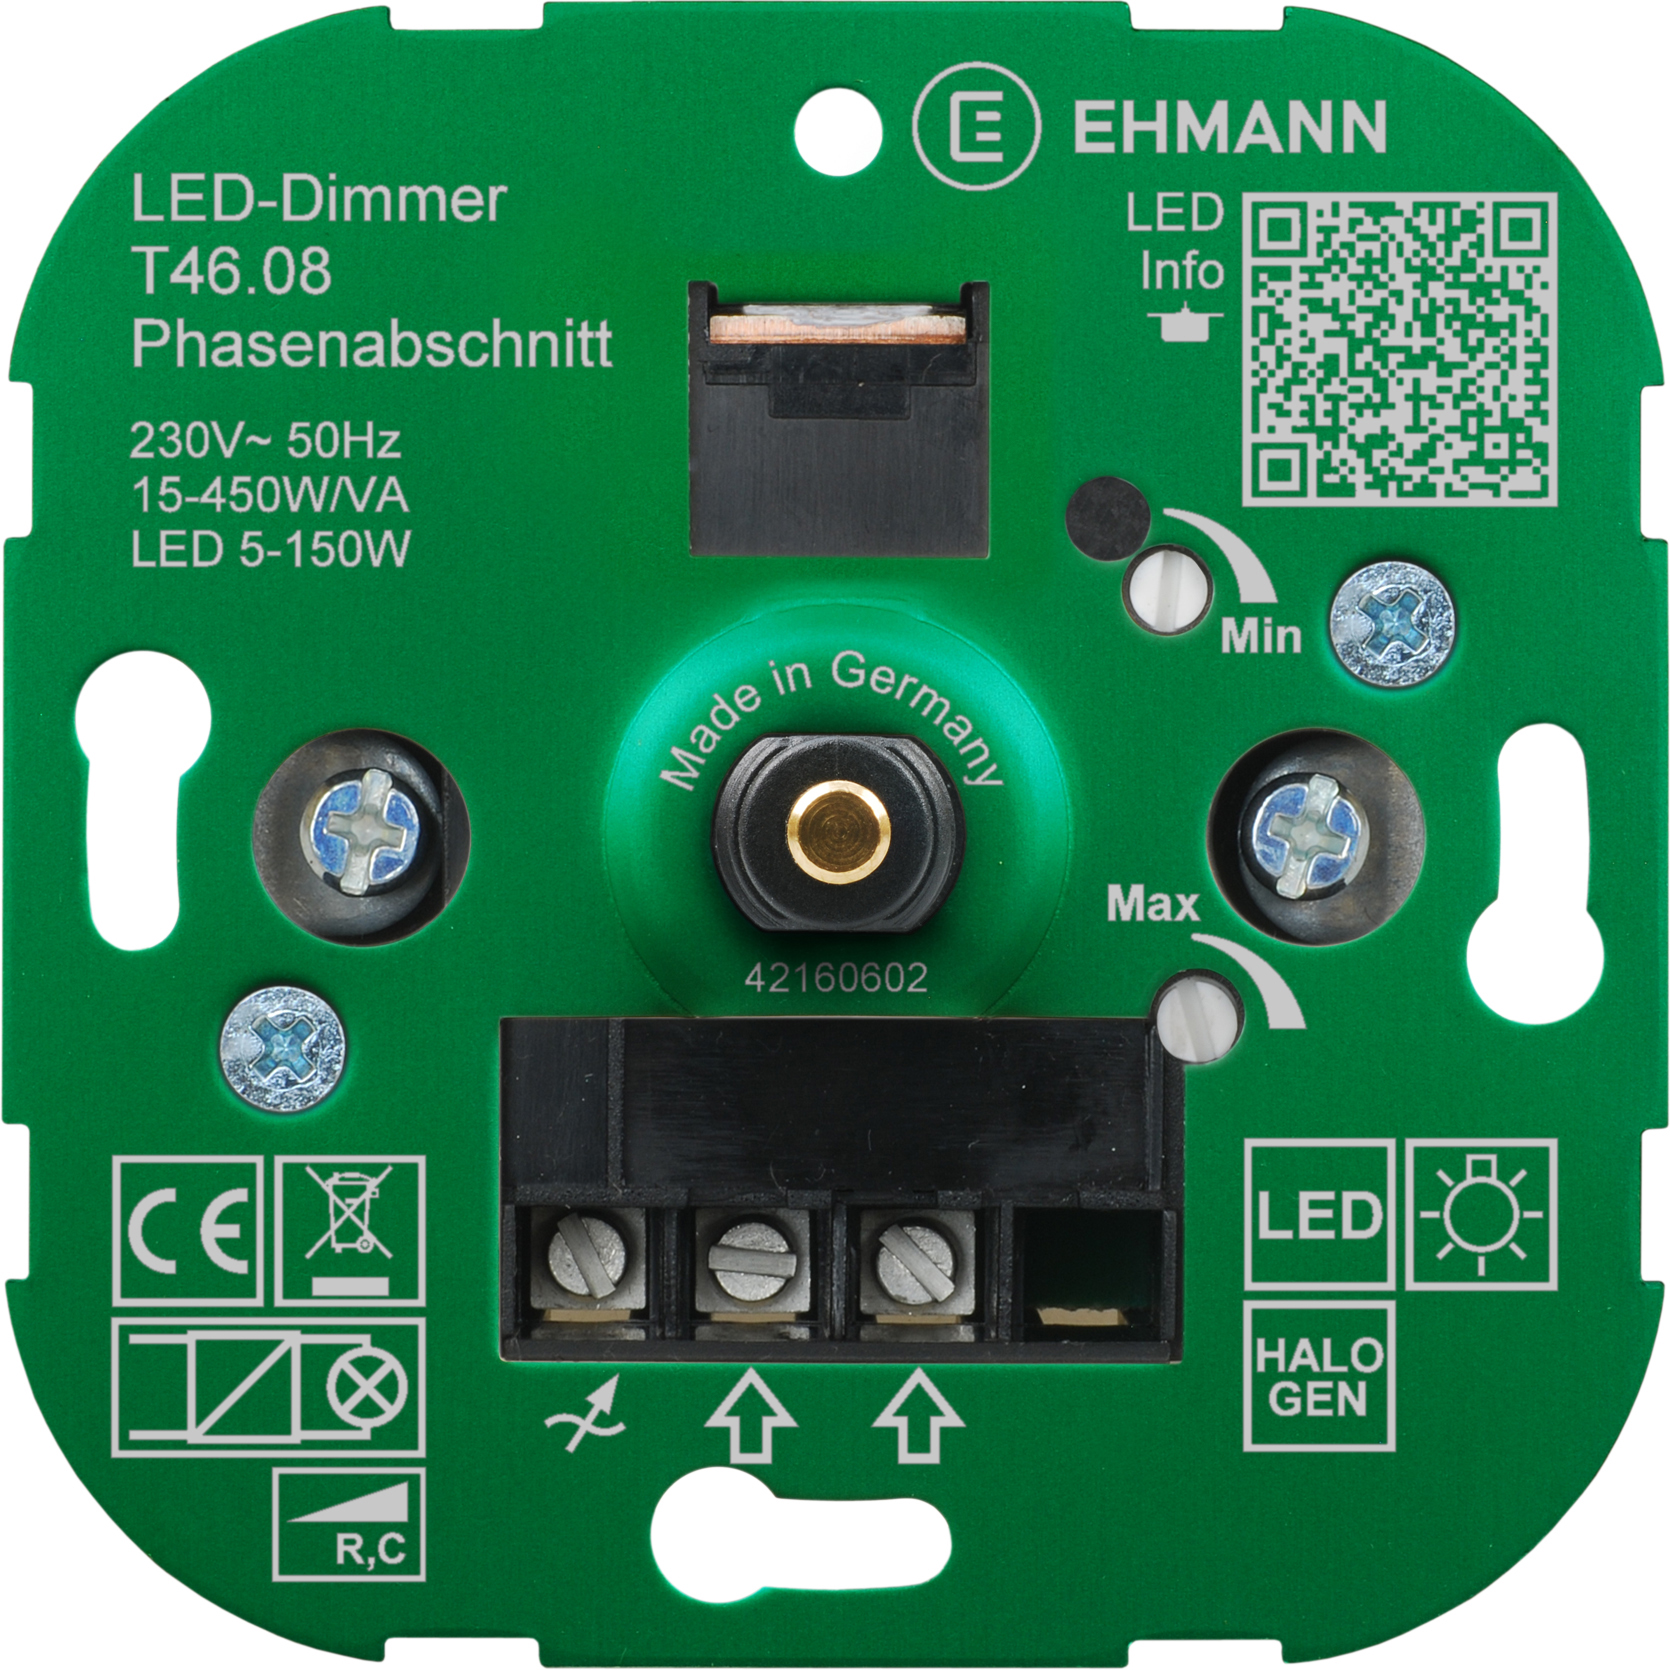 LED Unterputz-Dimmer T46.08